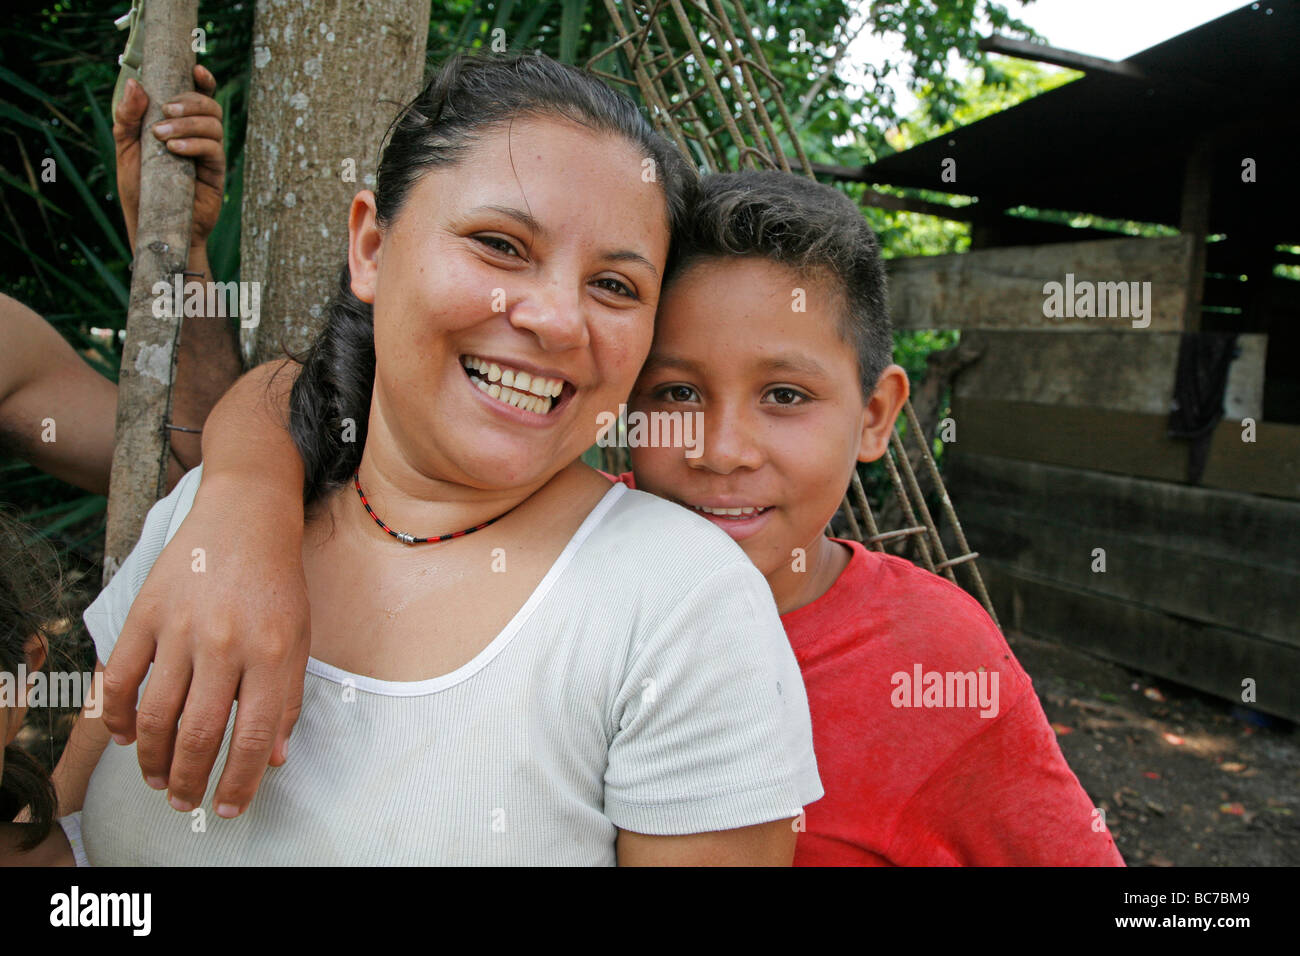 Painet jj1599 love people person guatemala son boy mother santa rita village returnees peten community fled violence 1980s Stock Photo